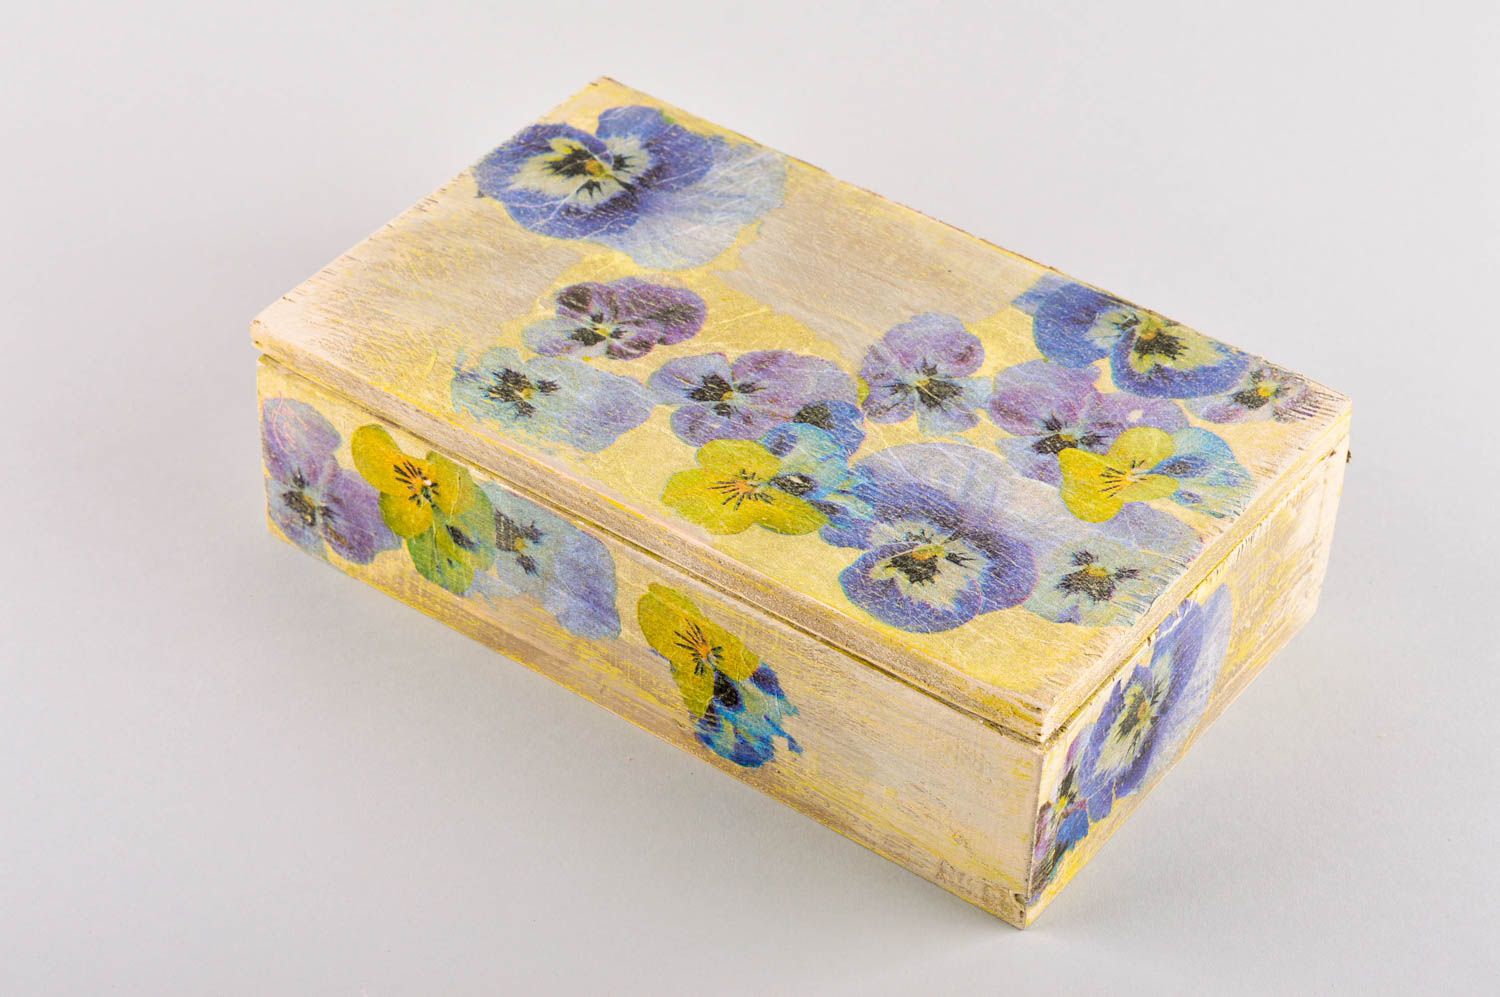 Beautiful handmade wooden box design decorative box for accessories gift ideas photo 5